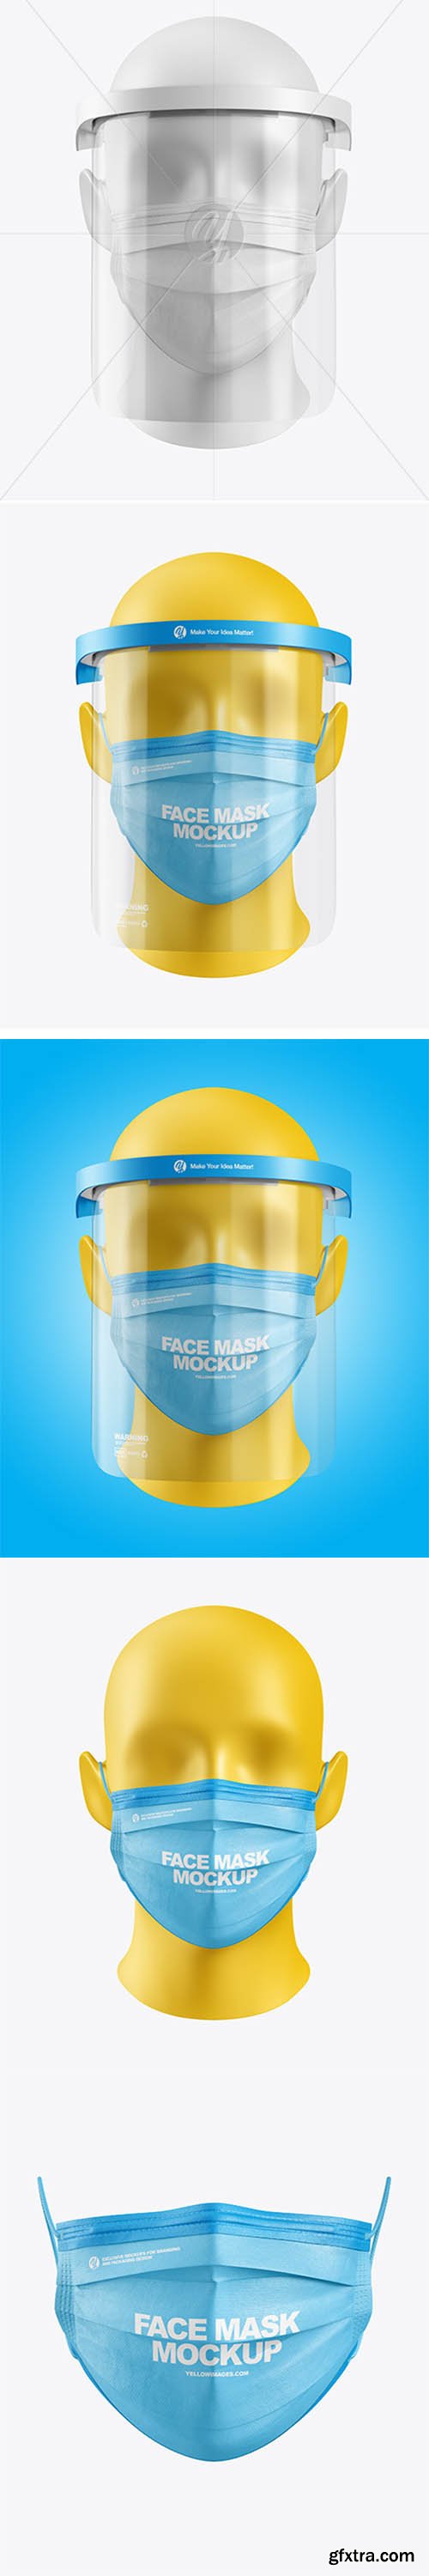 Face Mask & Face Shield Mockup 64074